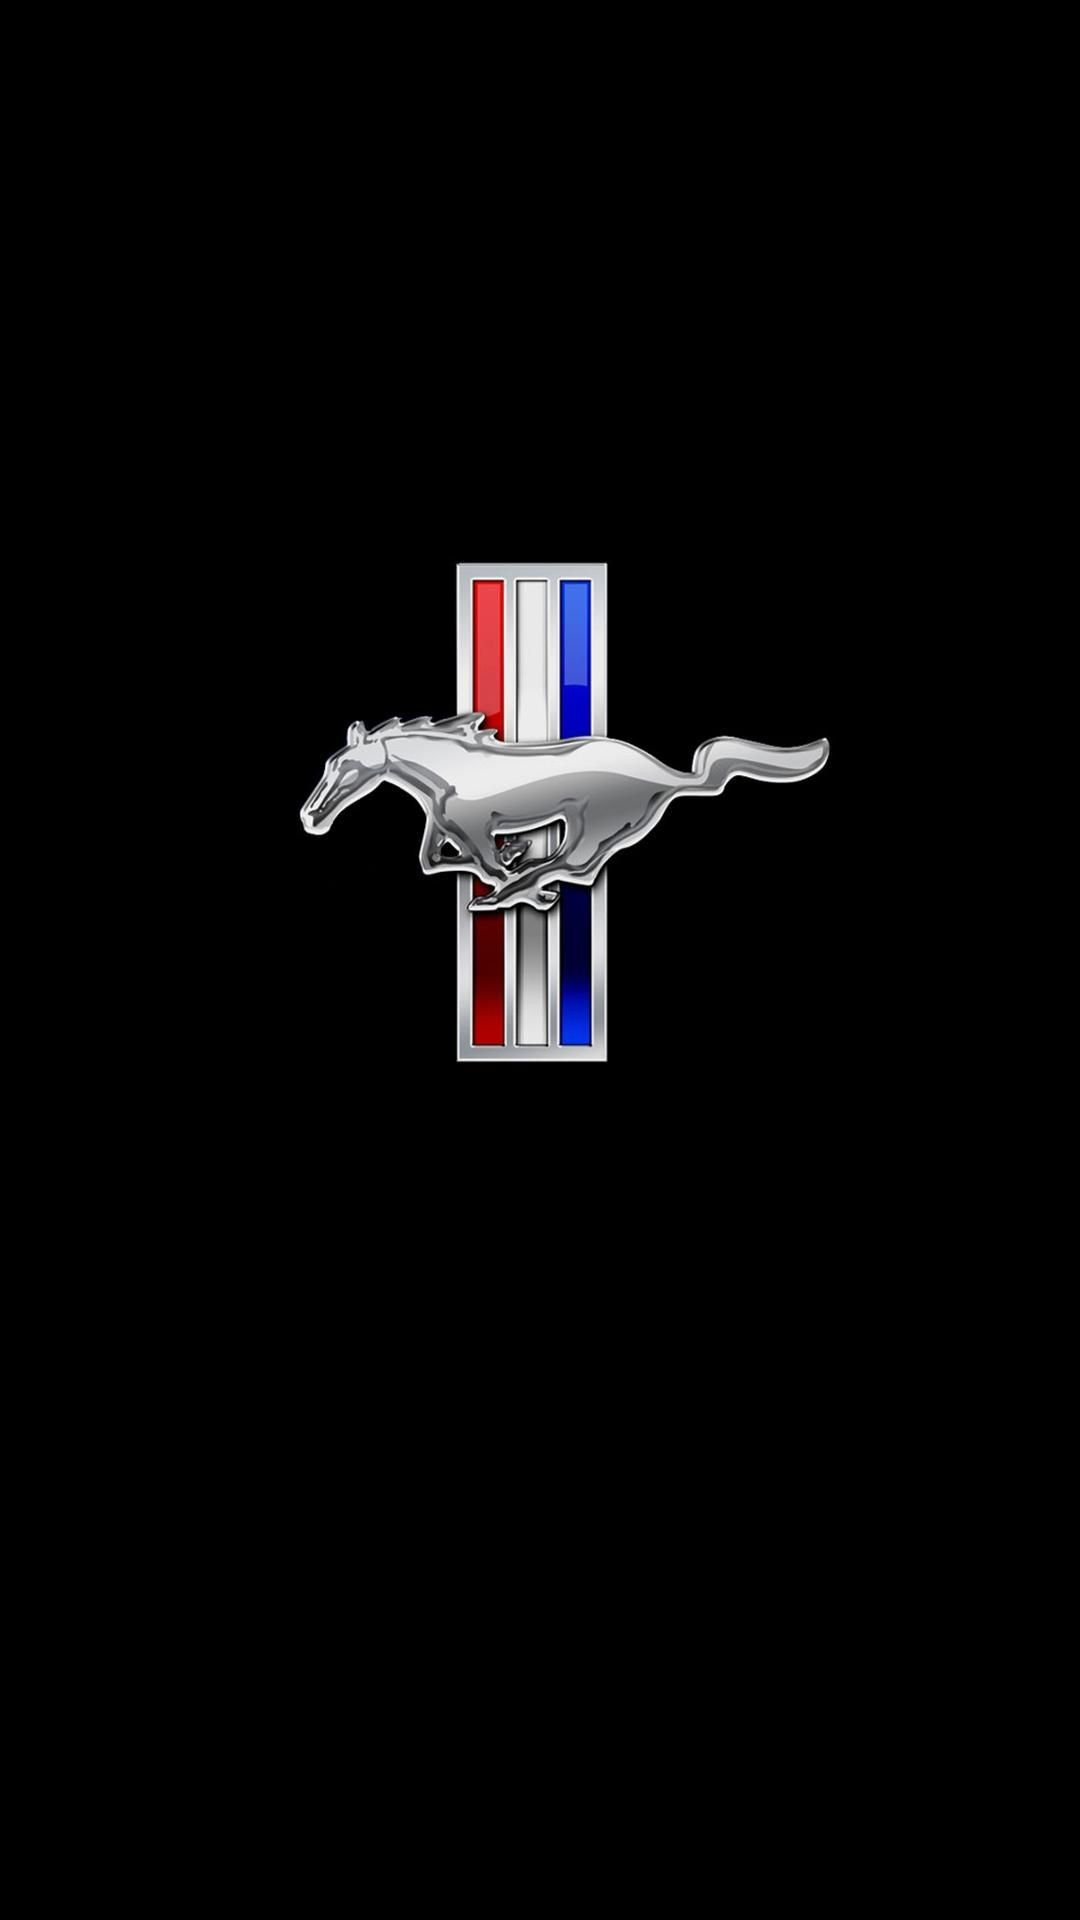 1080x1920 Pin by Steve Champagne on MUSTANGZ | Mustang logo, Mustang wallpaper, Mustang